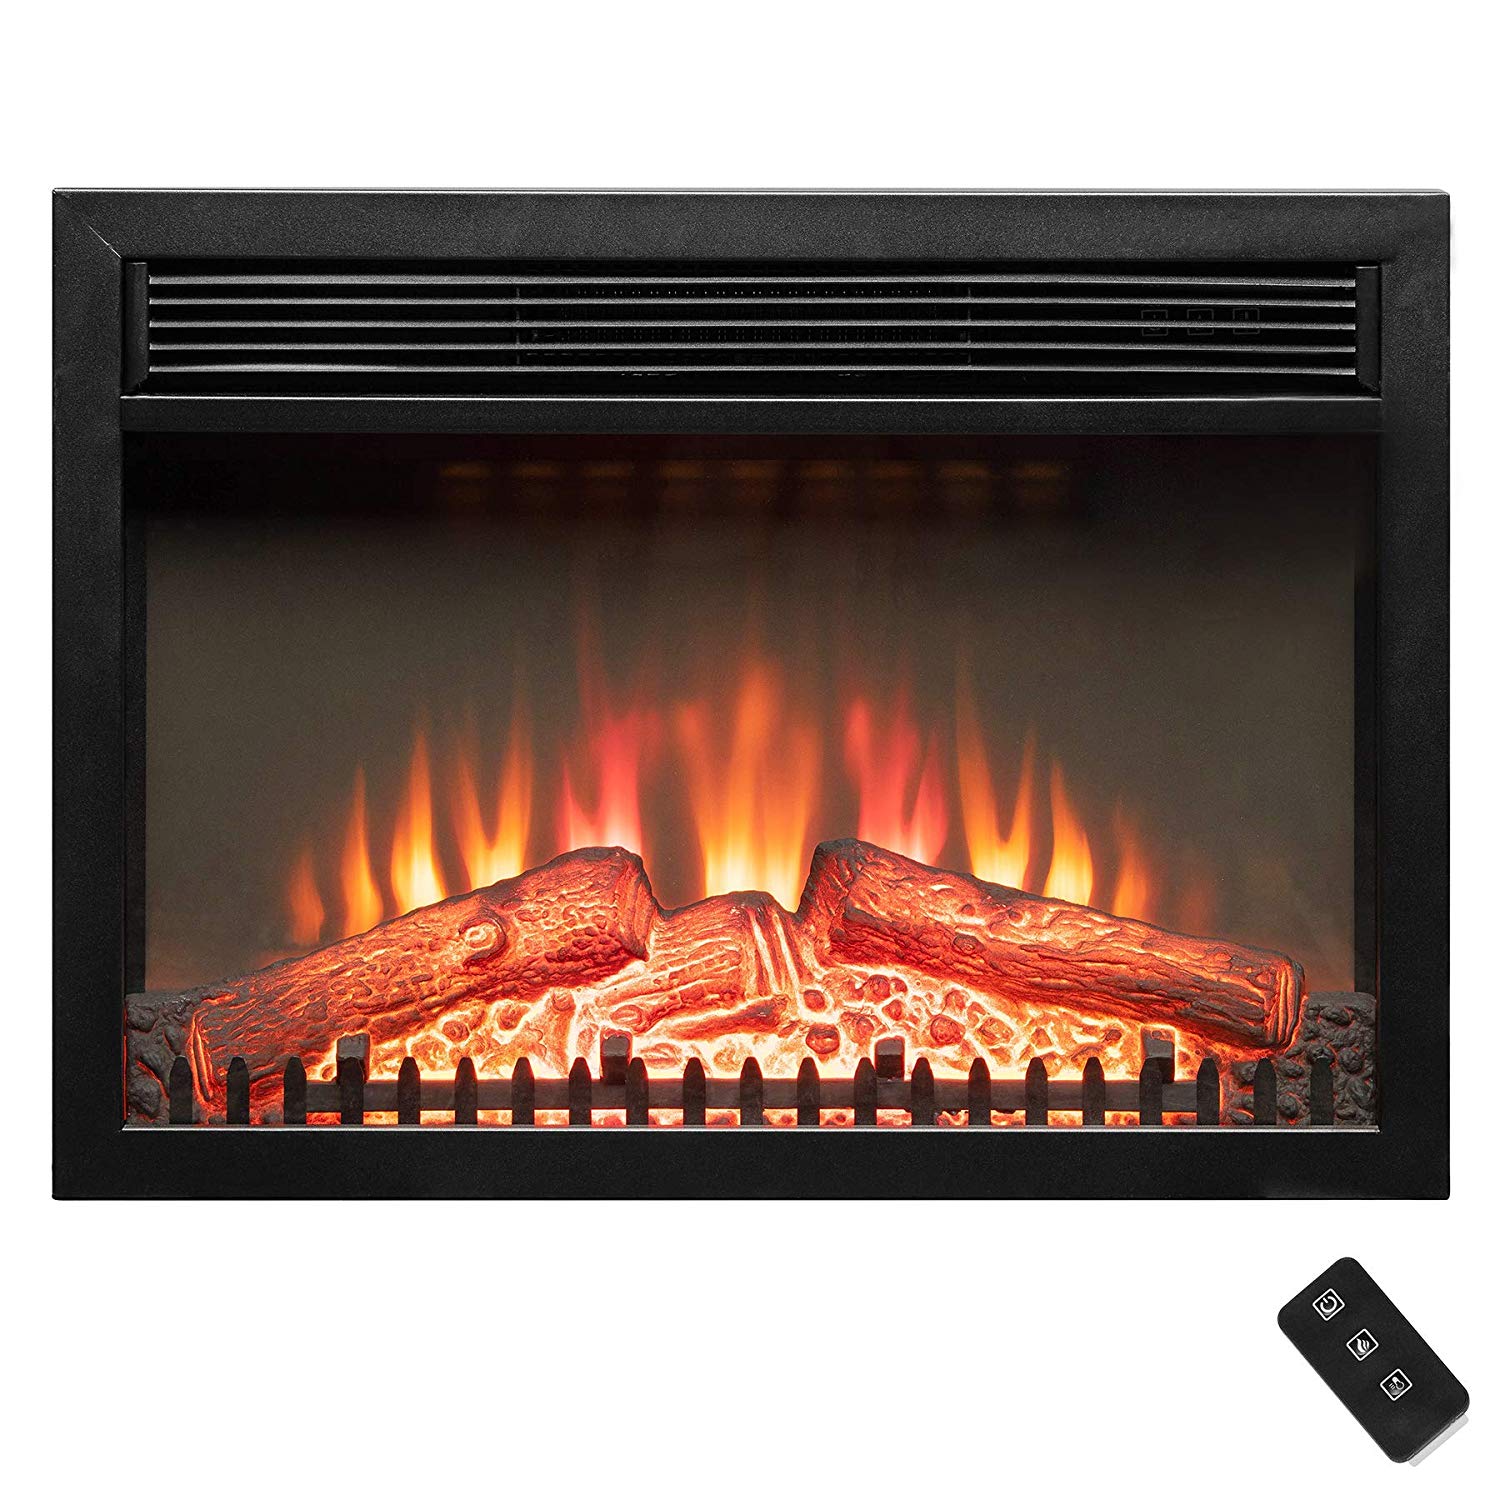 Infrared Electric Fireplace Insert New Amazon Golden Vantage 23" 5200 Btu 1500w Adjustable